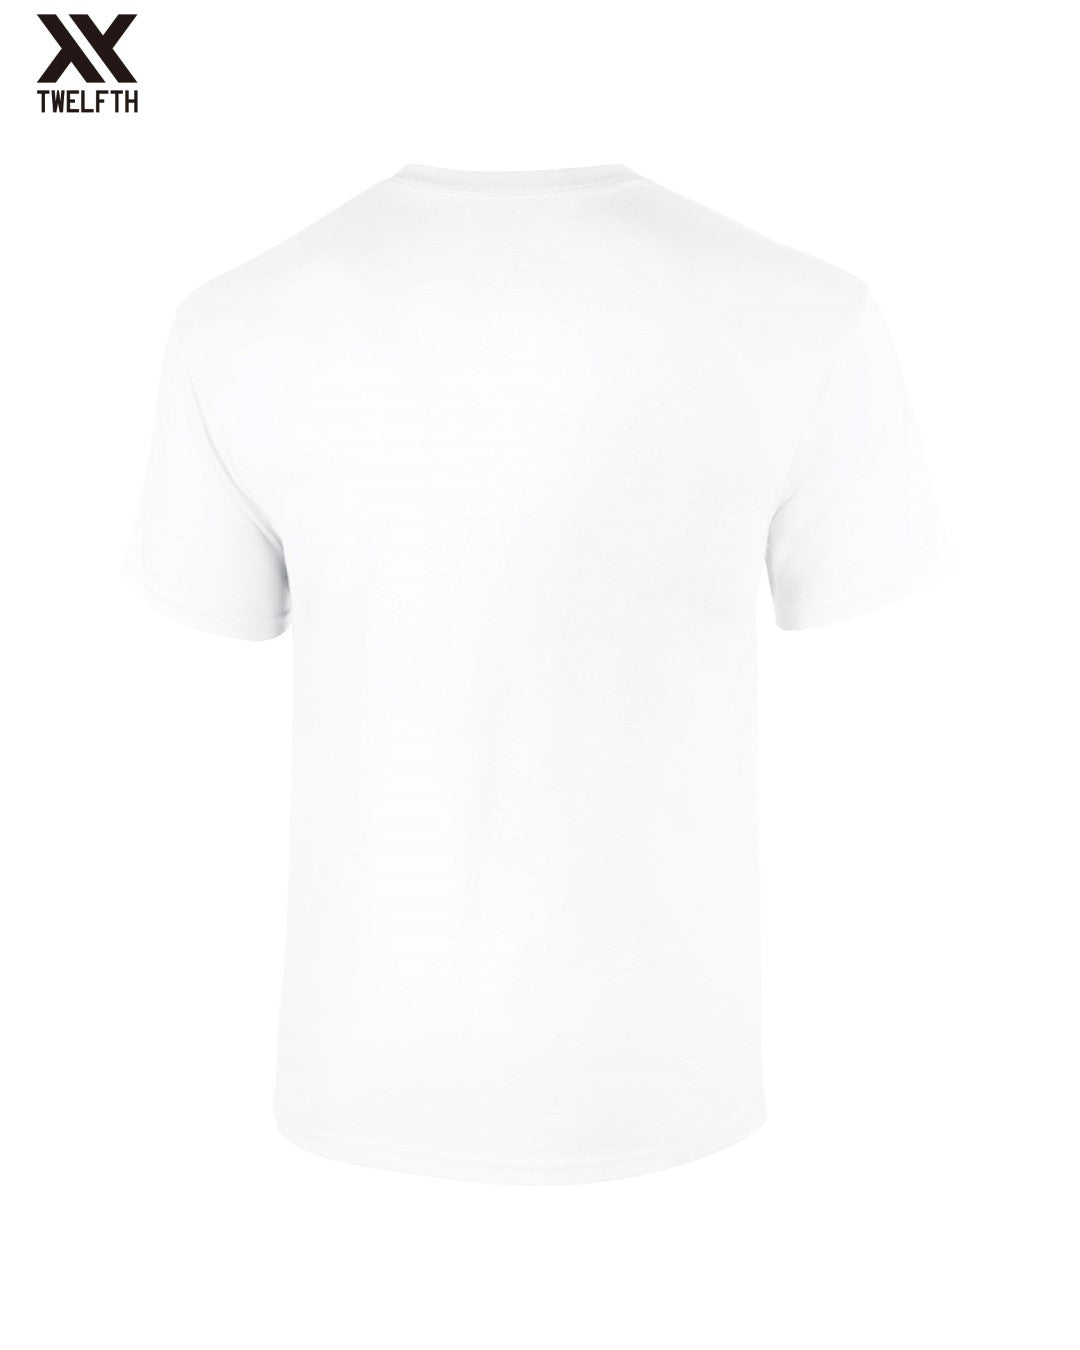 ROONEY KNOCKOUT CELEBRATION Pixel T-Shirt - Mens